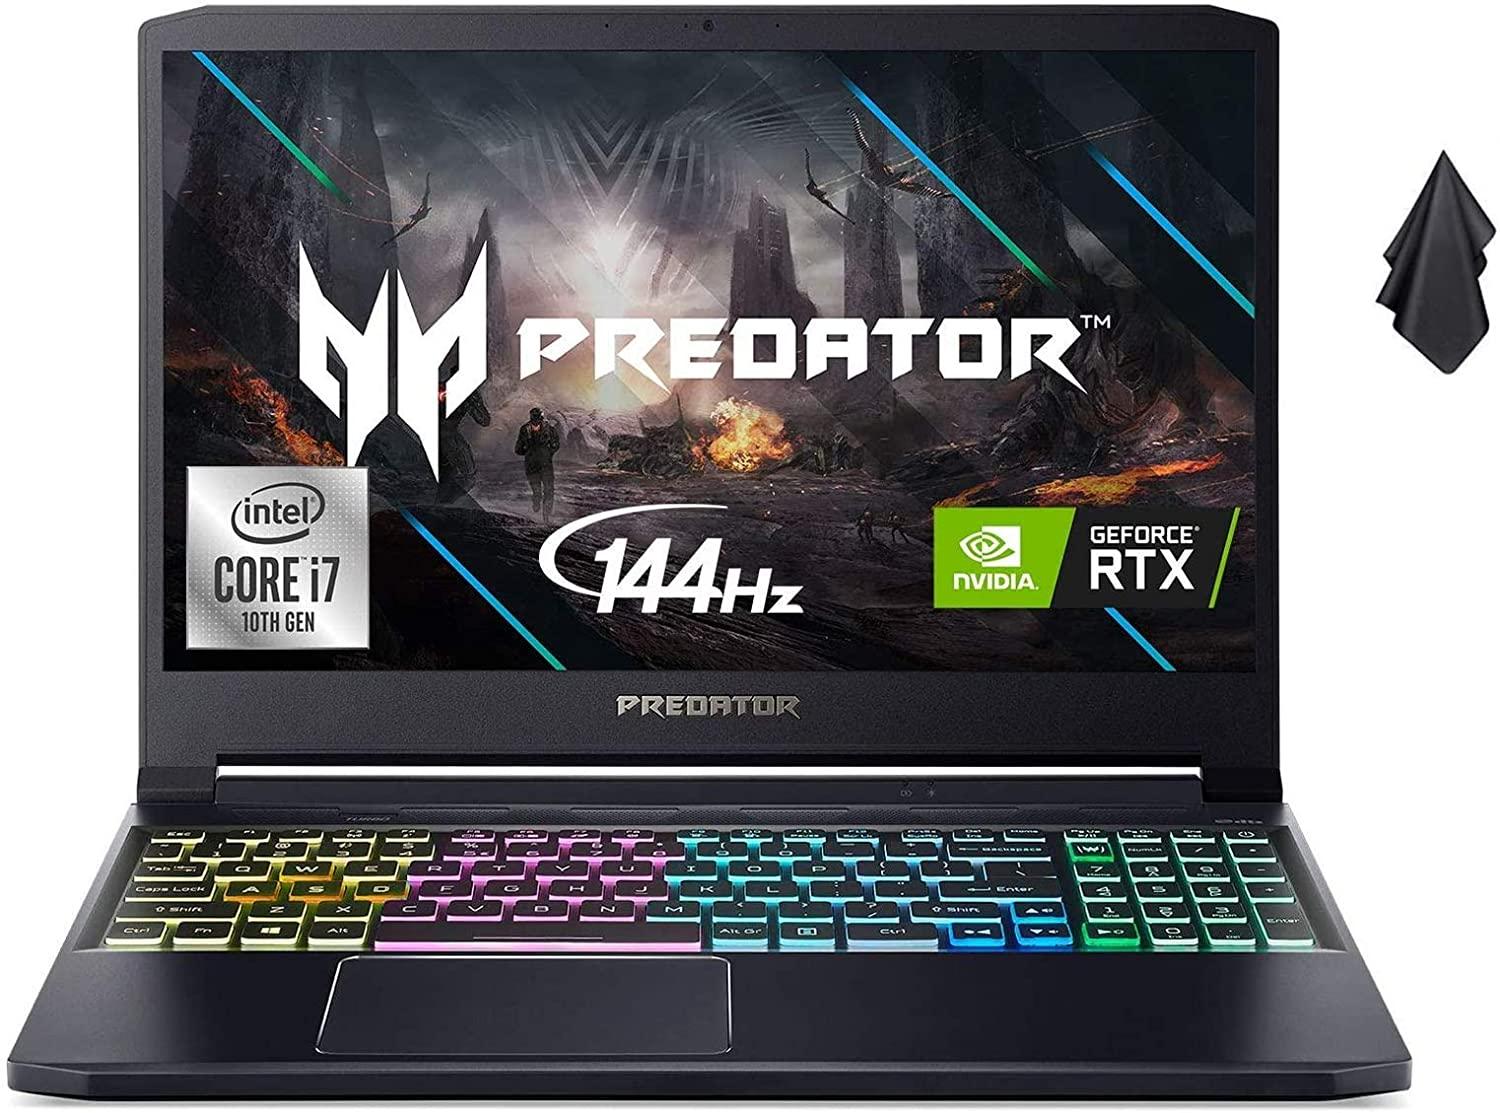 Acer Predator Triton 300 15.6in i7 16GB 512GB RTX 3070 Laptop for $1199.99 Shipped